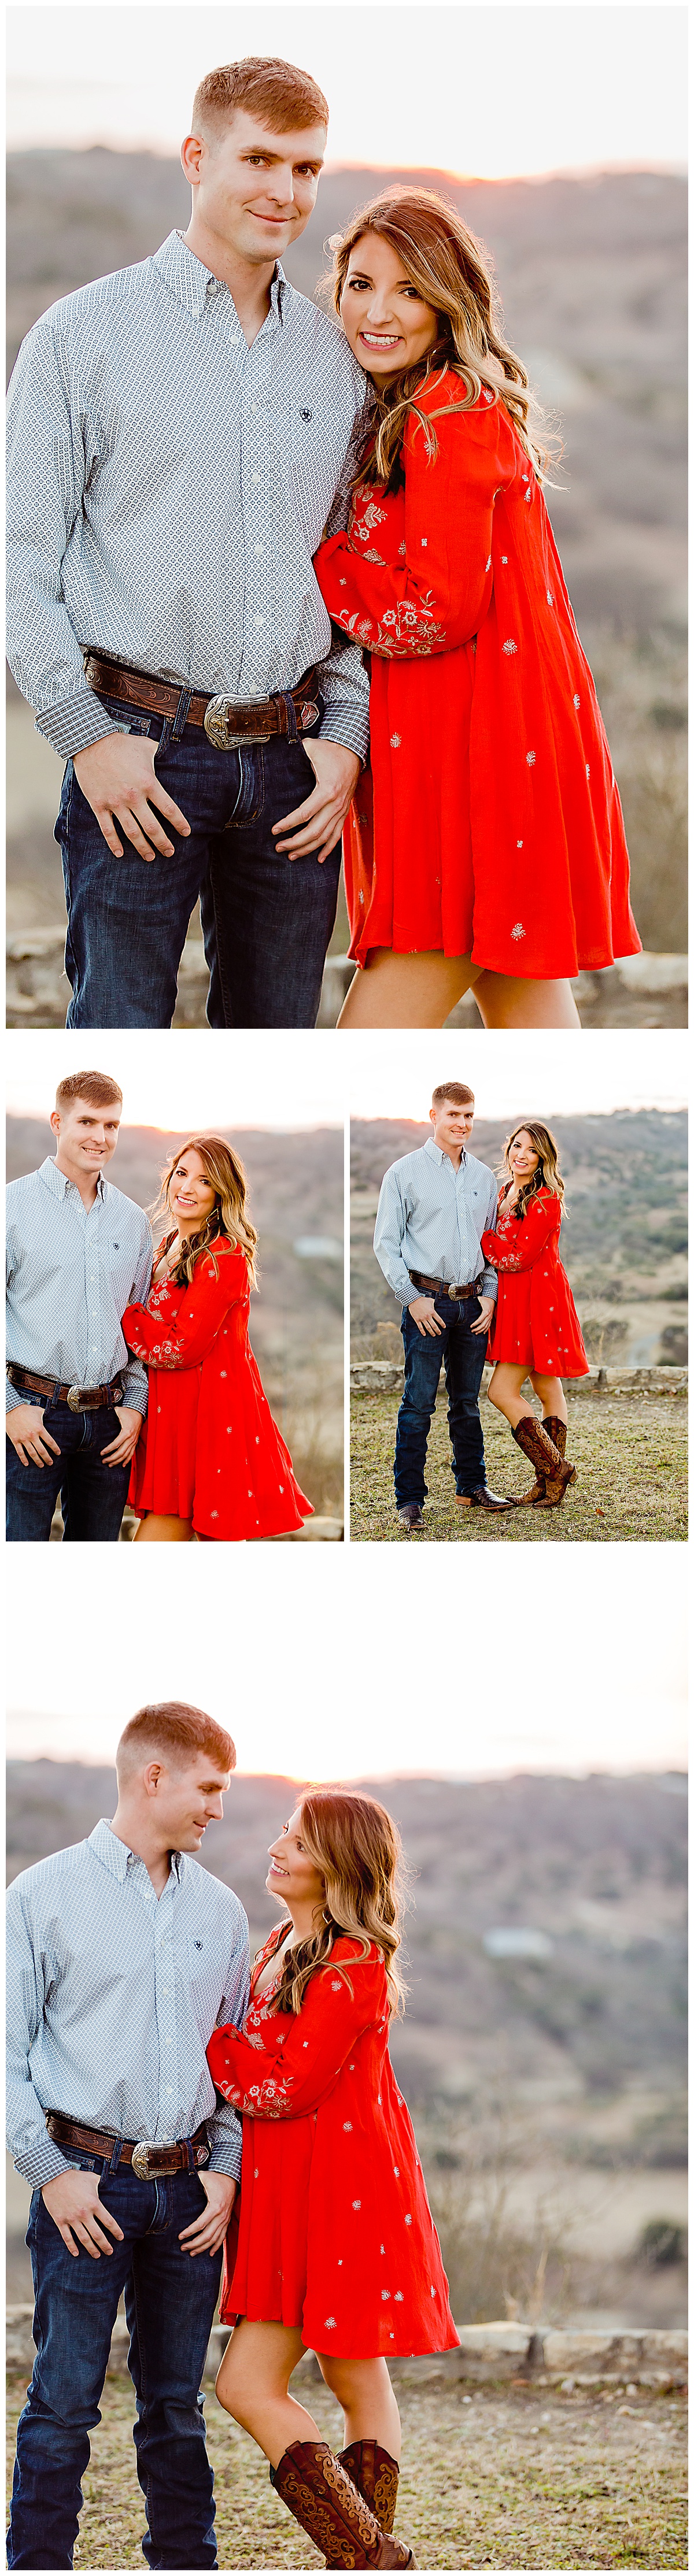 South-Texas-Wedding-Photographer-Engagement-Photos-Happy-H-Ranch-Comfort-Texas-Sunset-Couples-Carly-Barton-Photography-Justin-Erica_0008.jpg